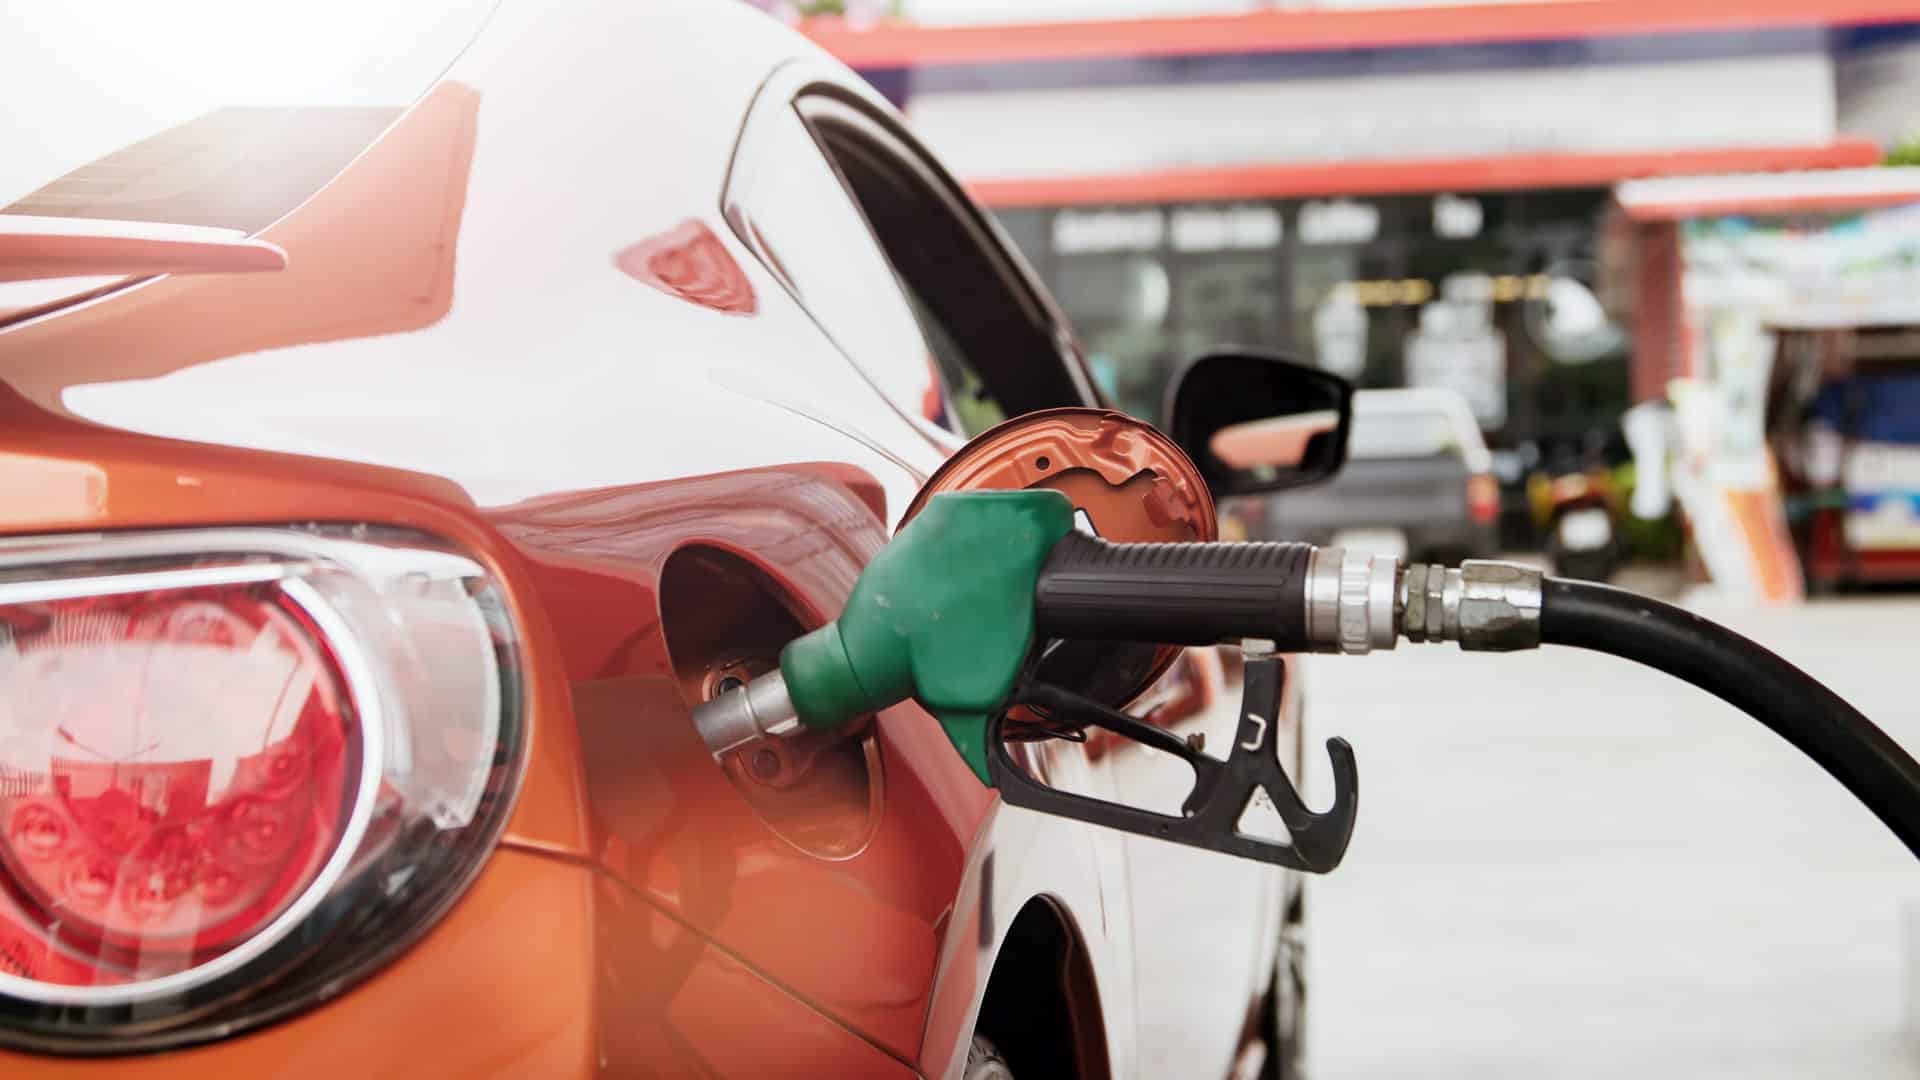 A flex fuel gas pump is shown in a red car's gas tank.